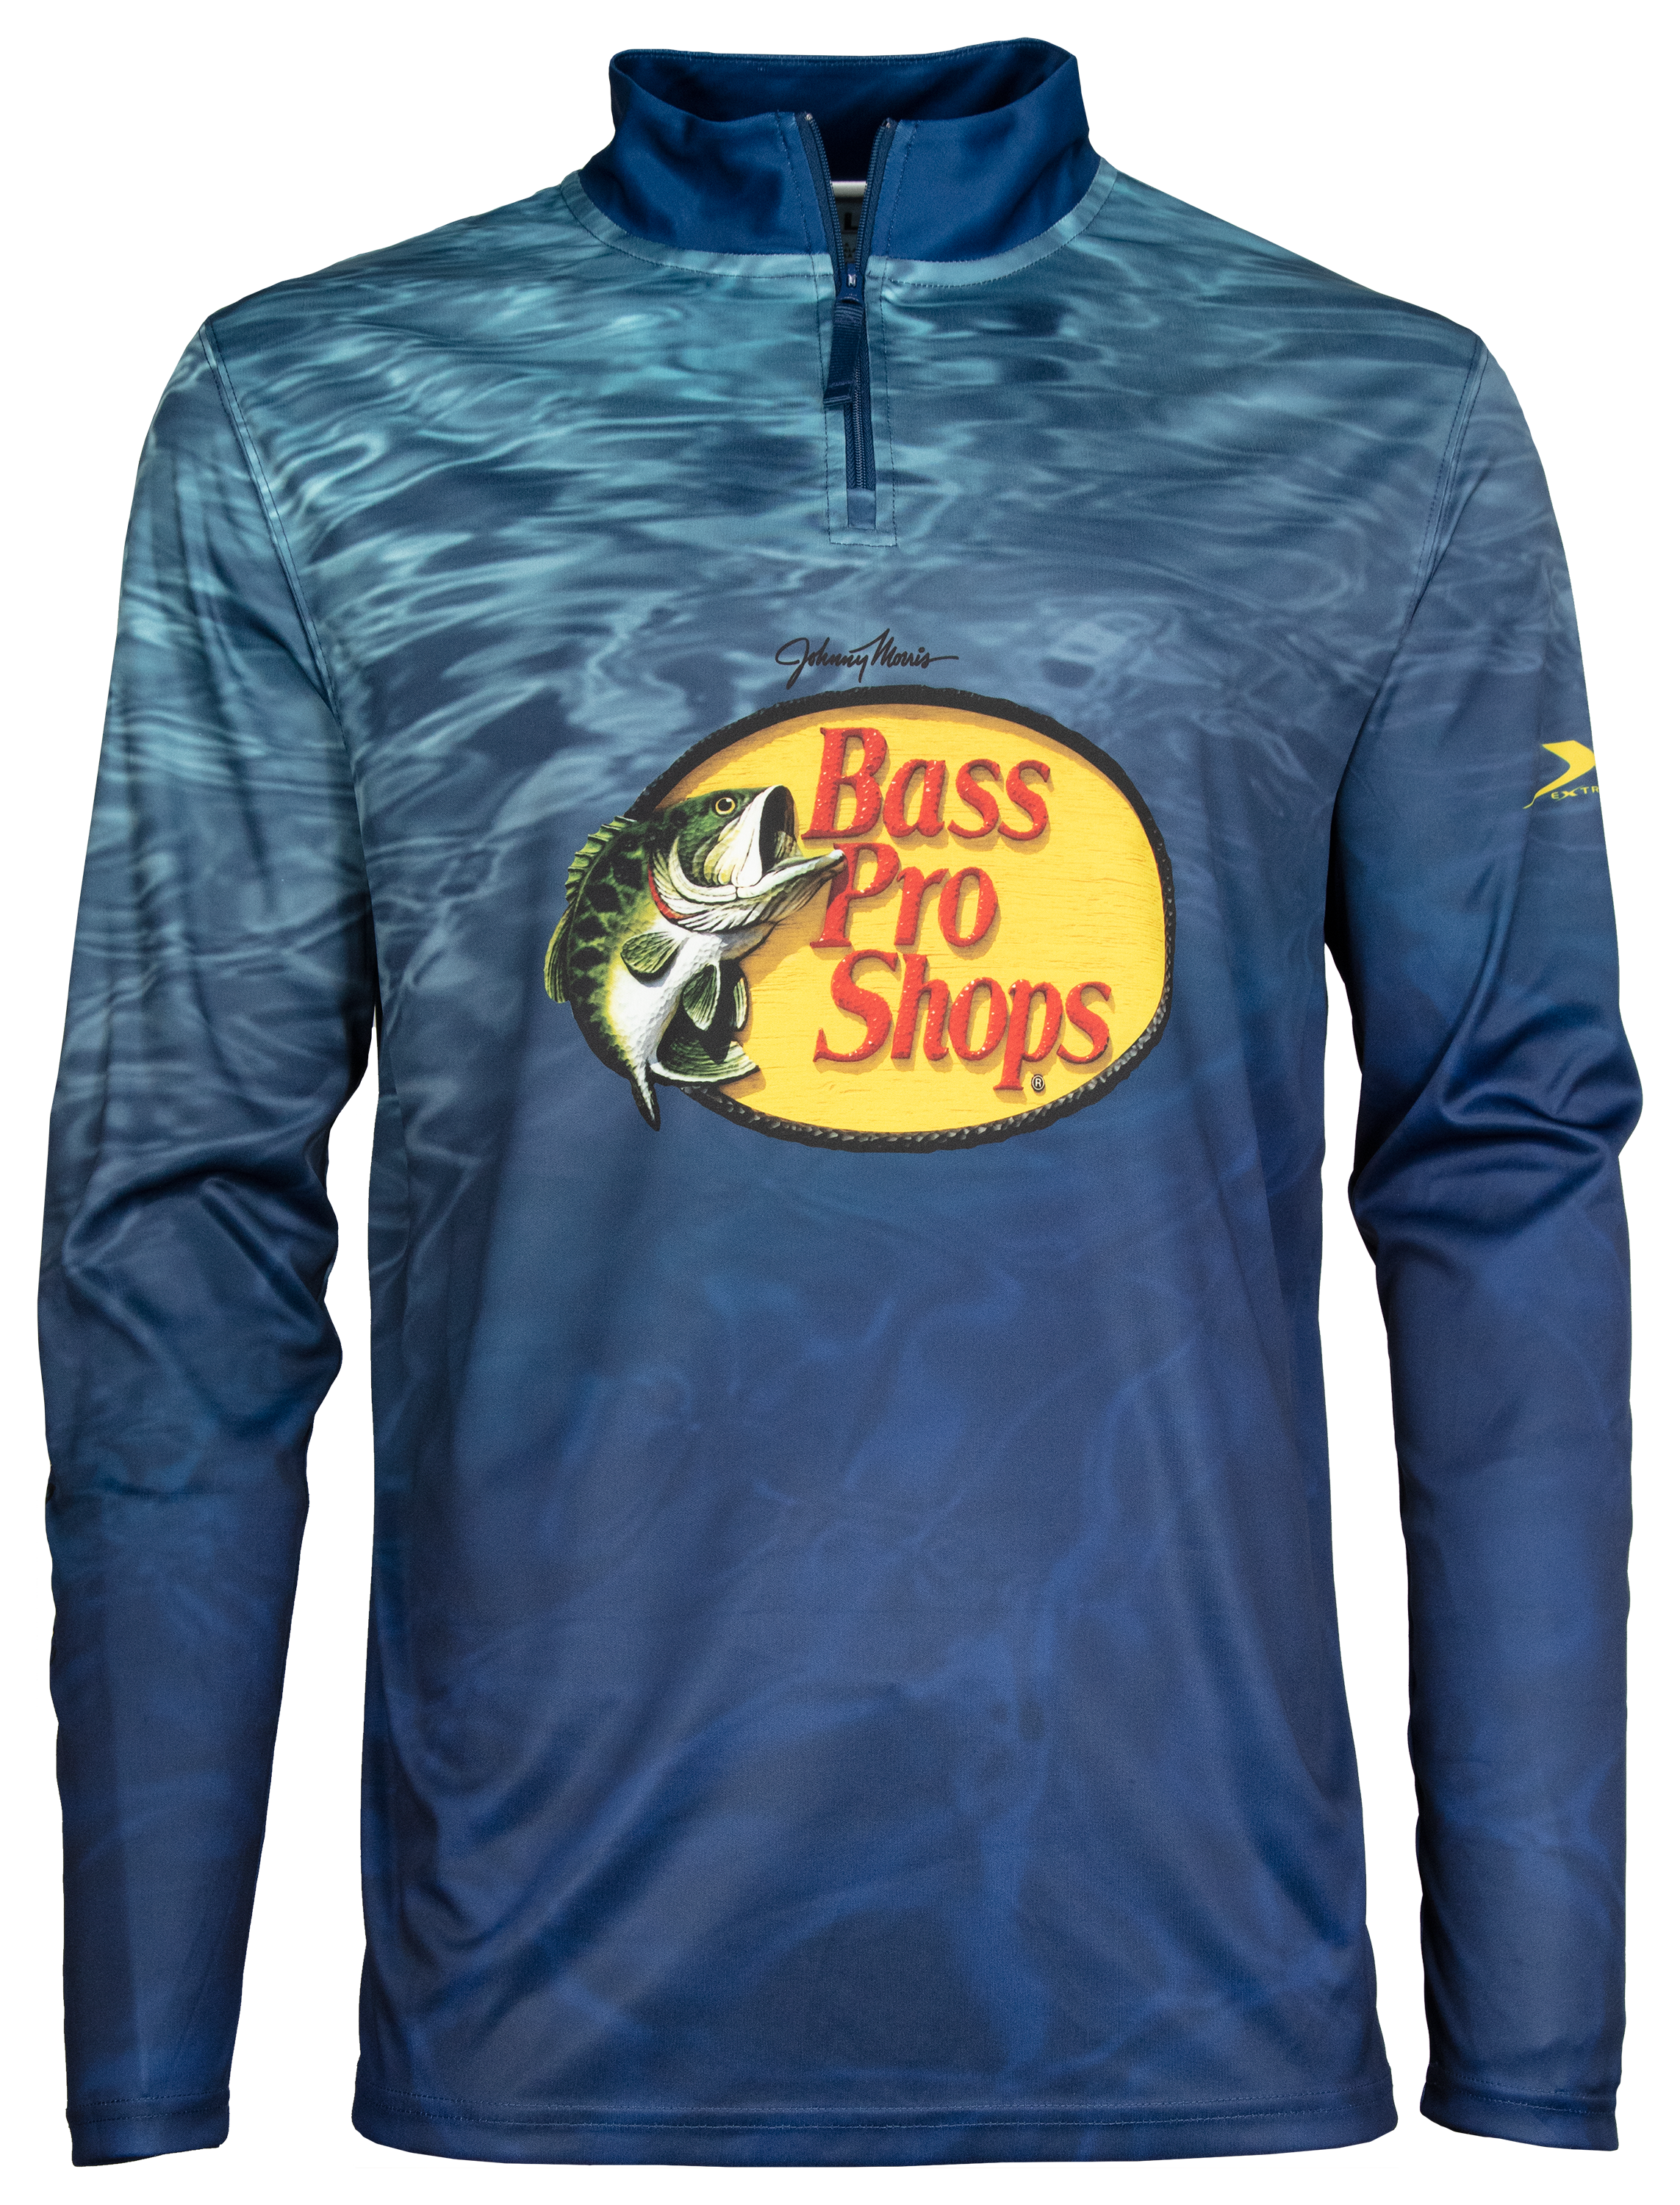 Bass Pro Shops Signature Series Long-Sleeve Performance Shirt for Men